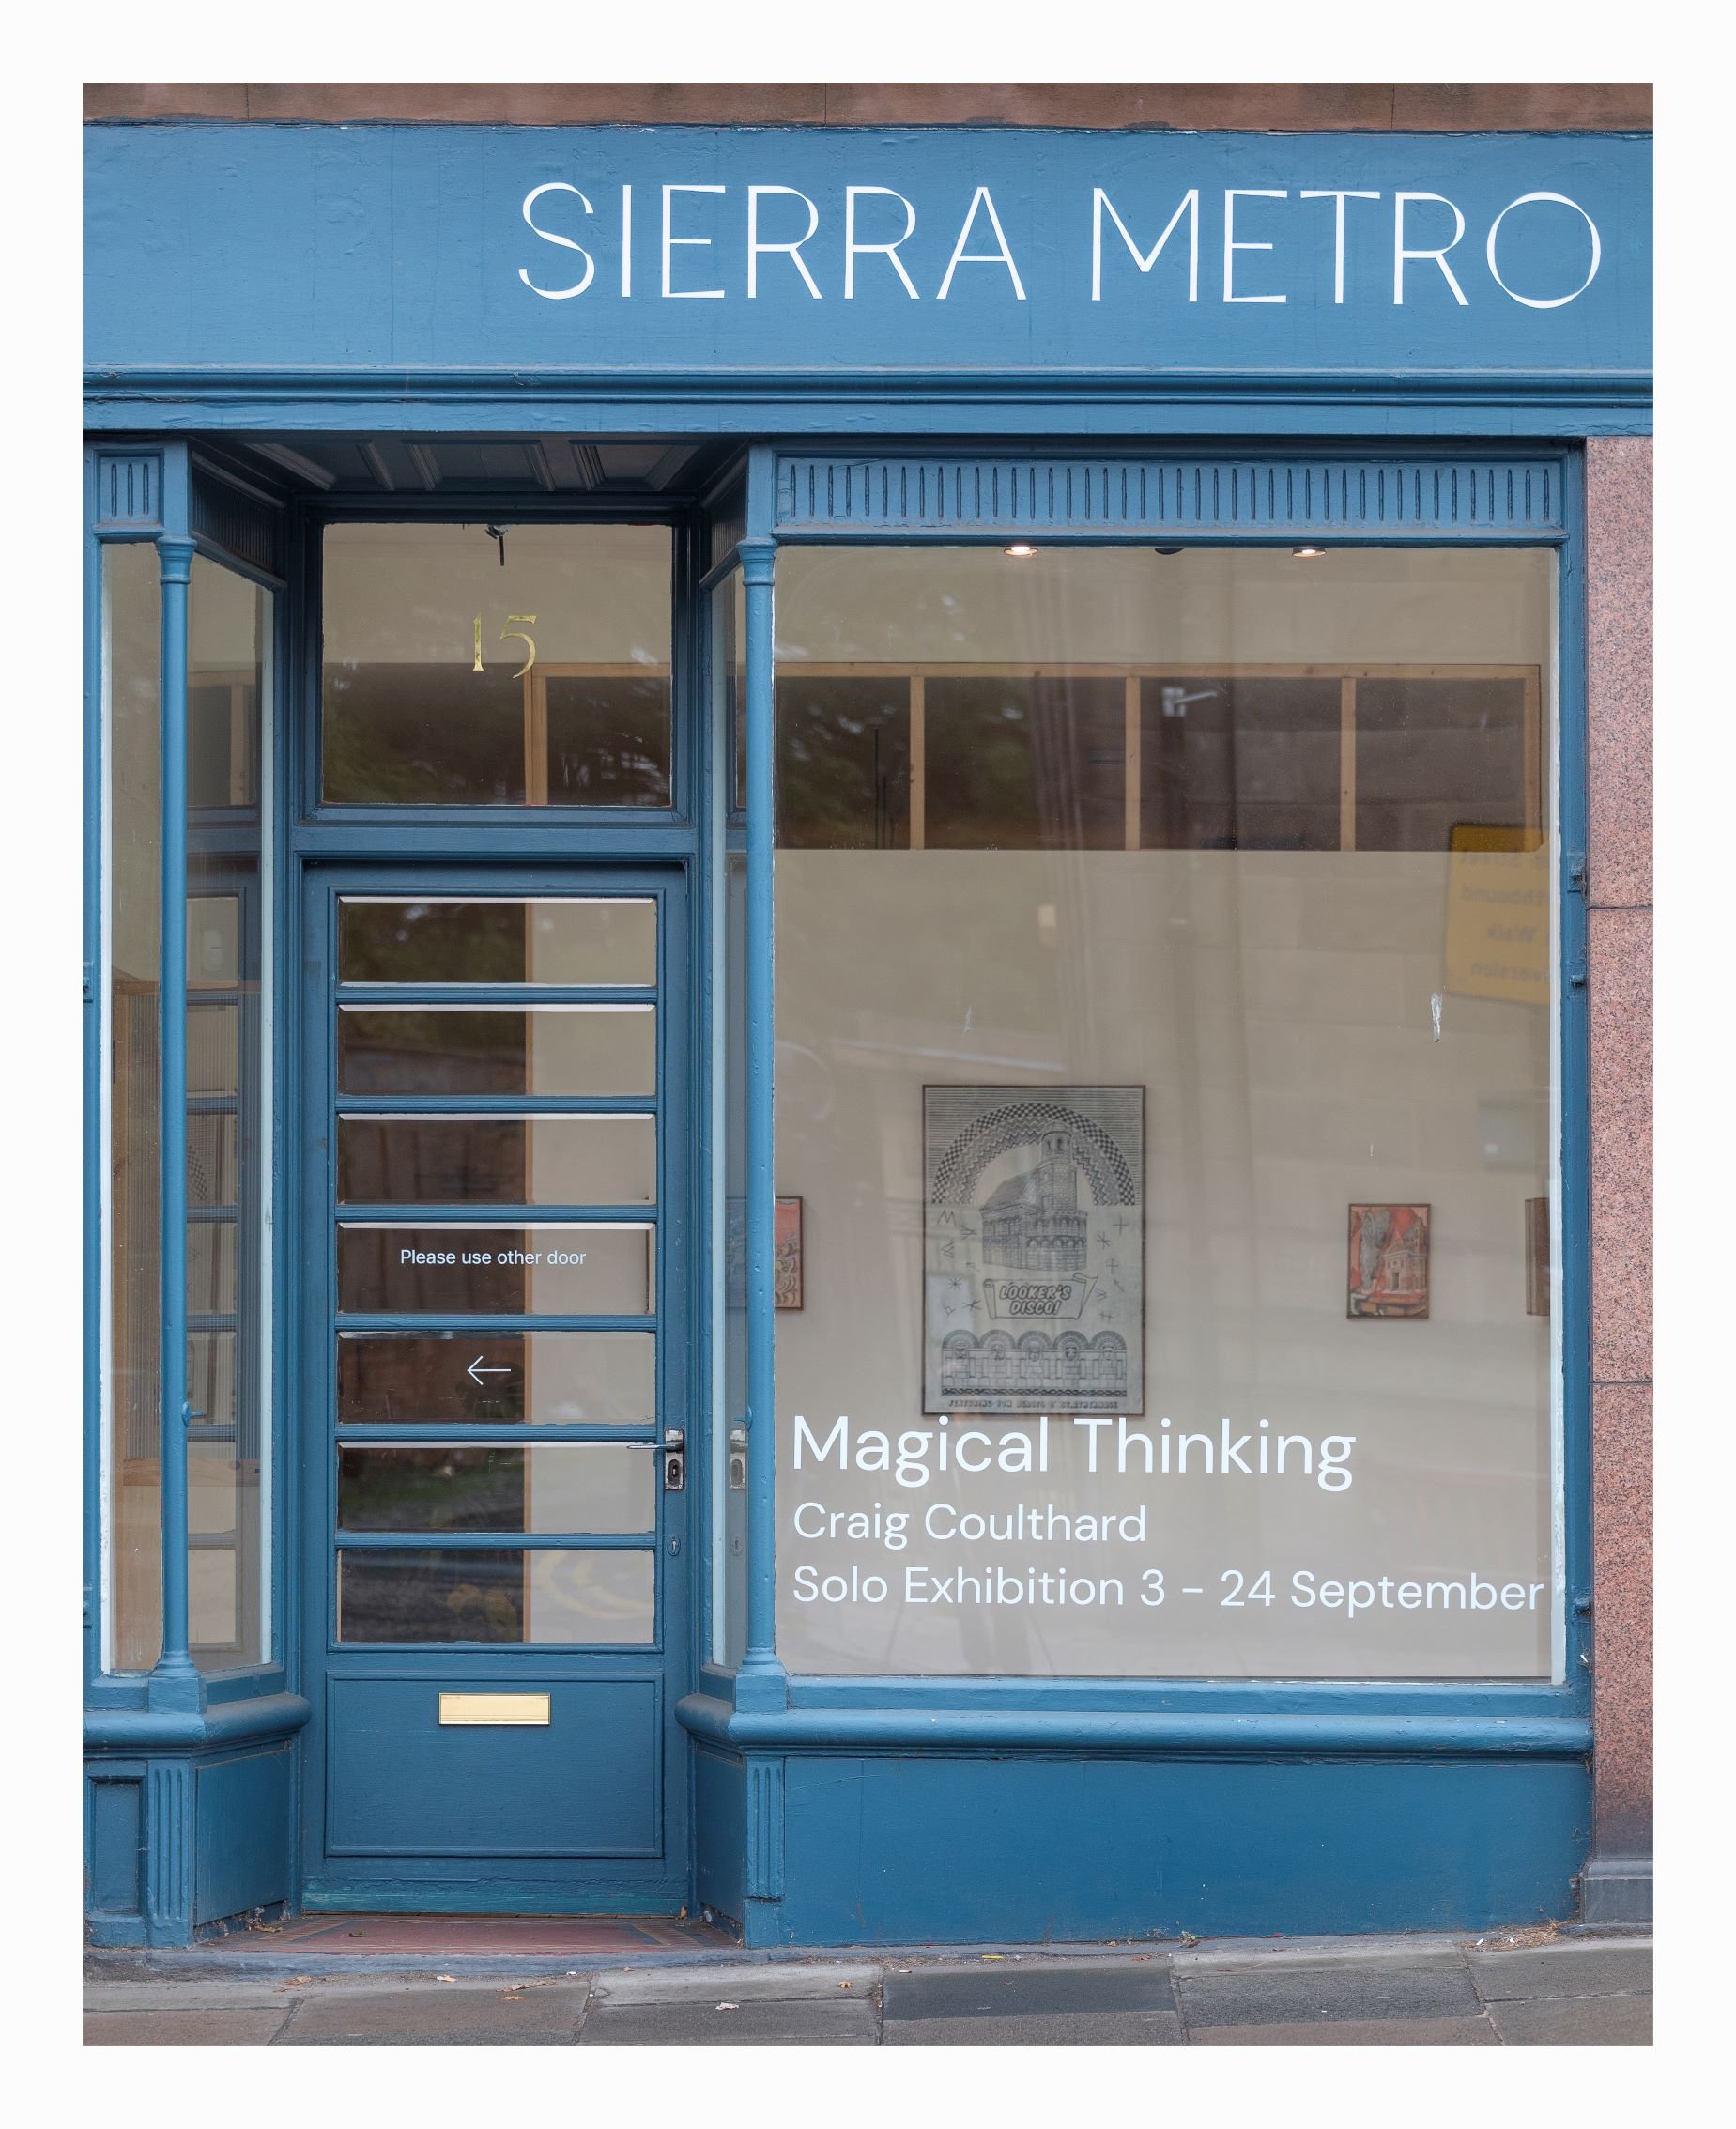  Installation views of ‘Magical Thinking’ at Sierra Metro, Edinburgh 